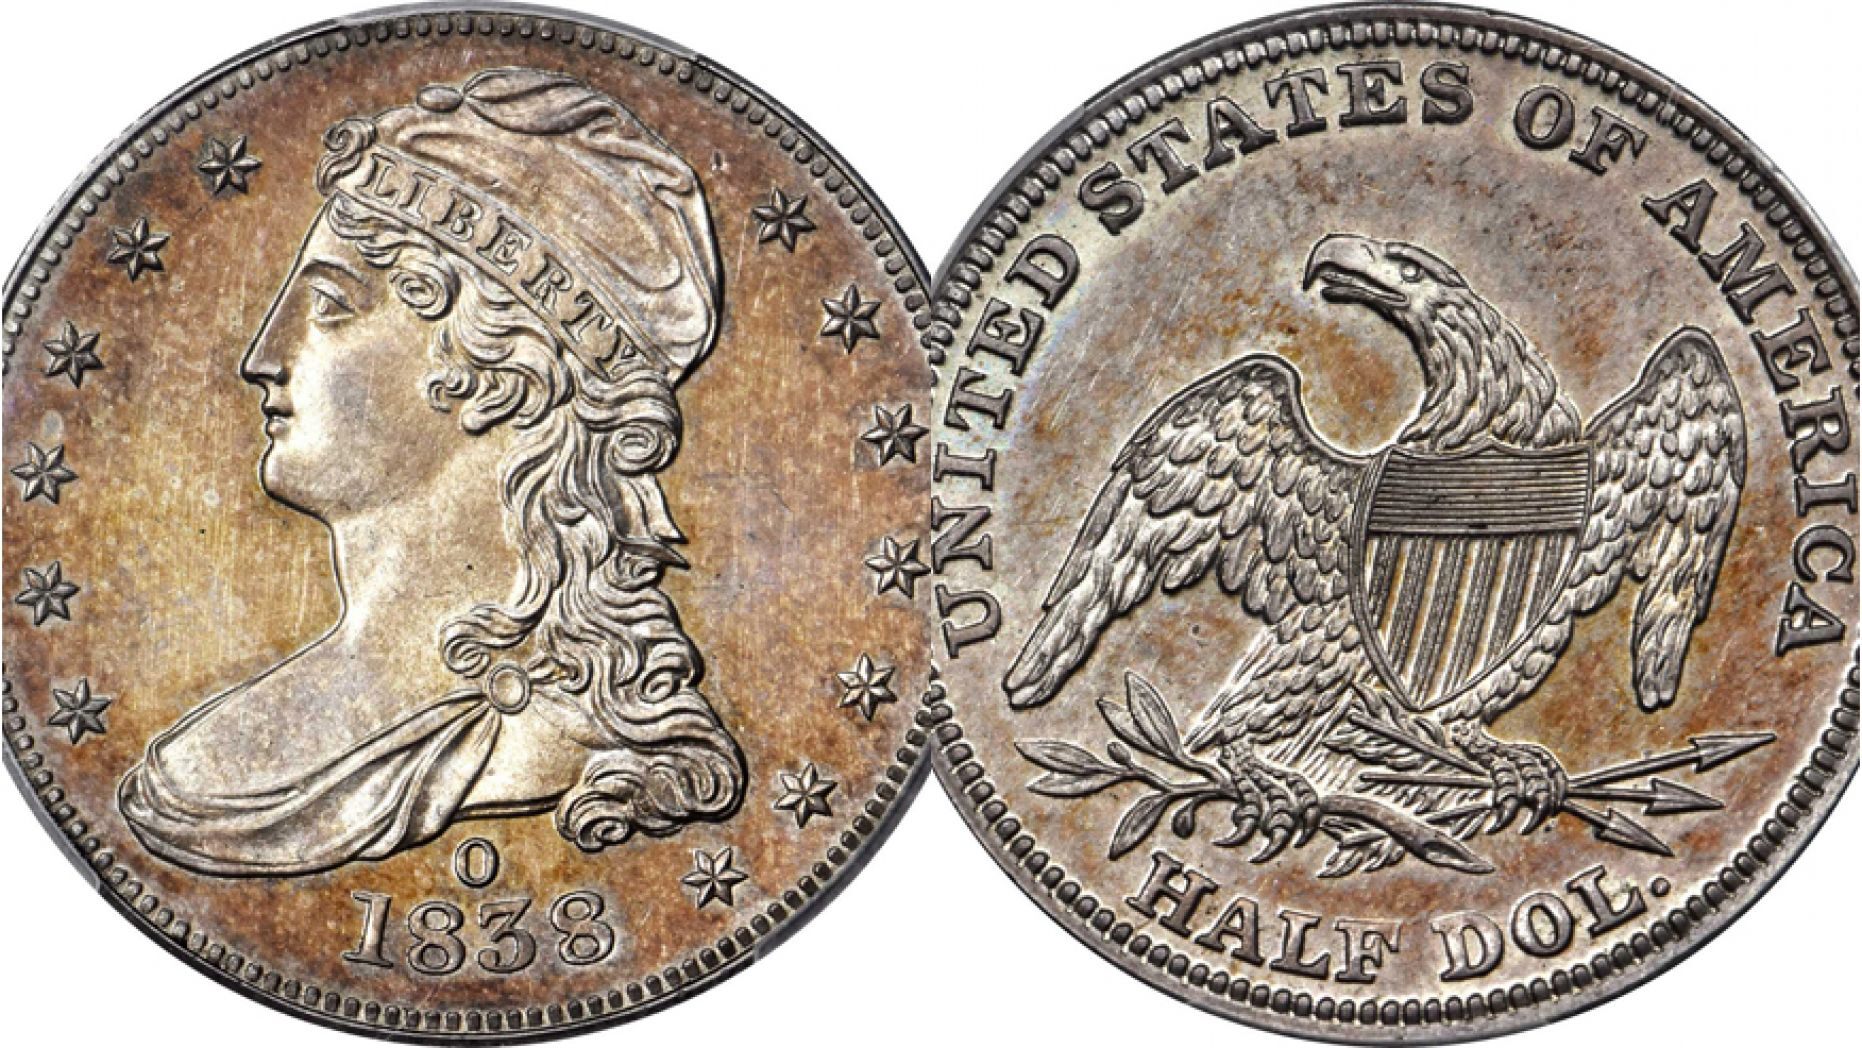 Rare 1838 half dollar coin sold for $504,000